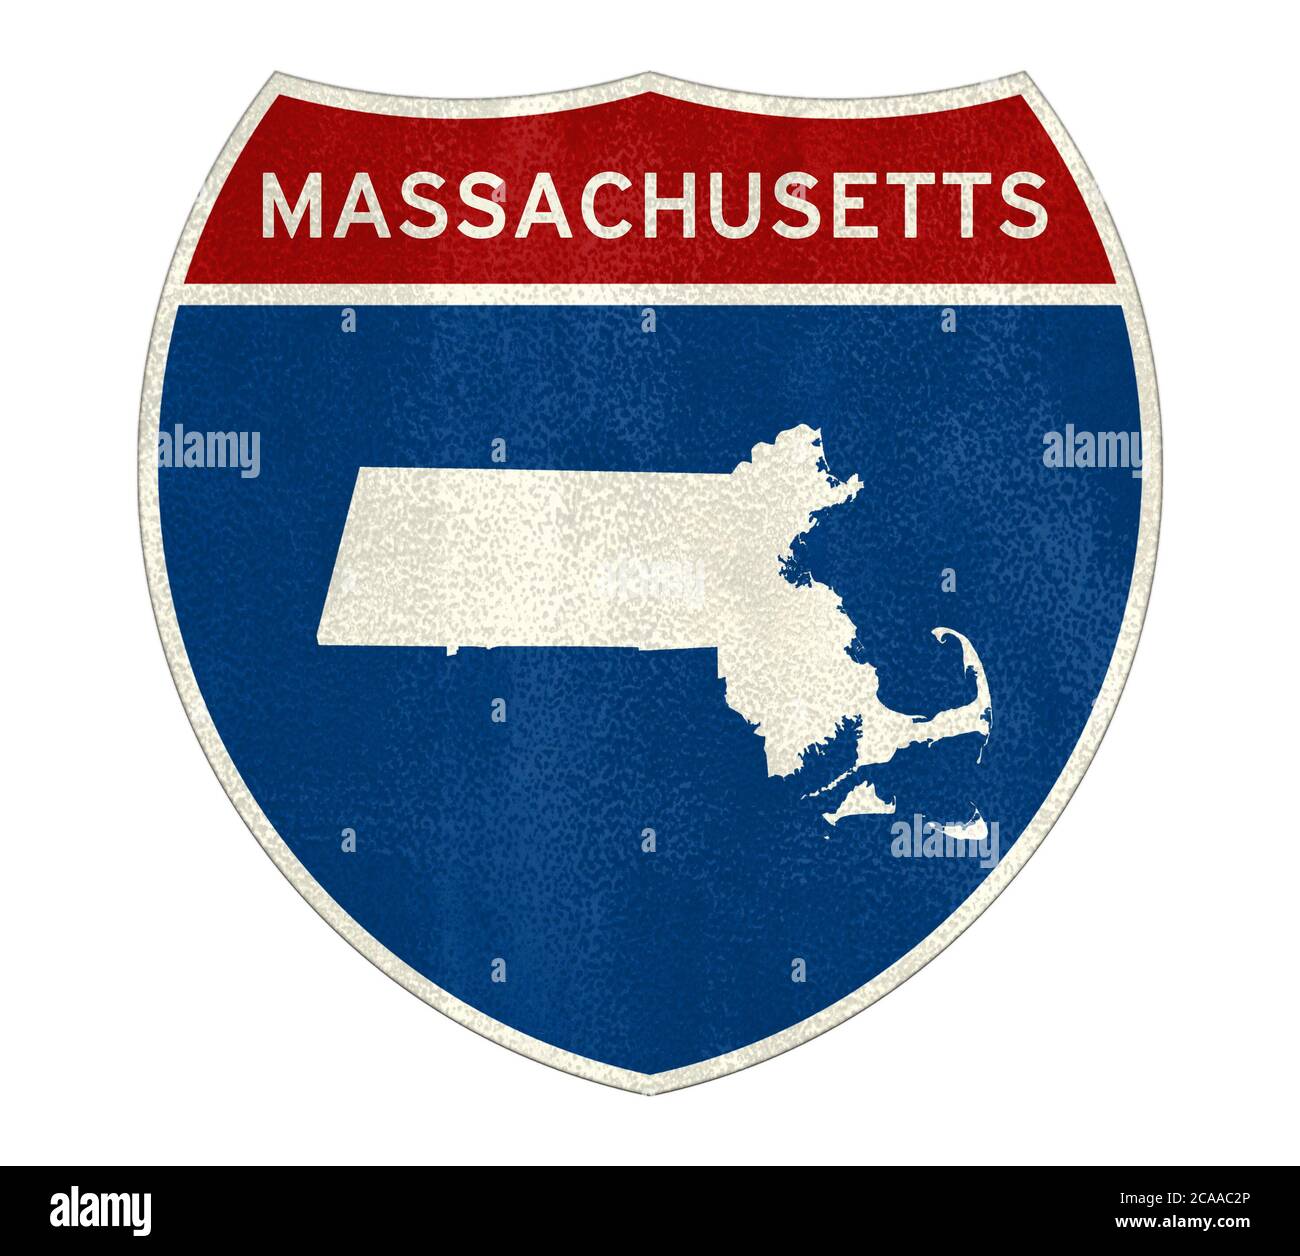 Massachusetts State Interstate road sign Stock Photo